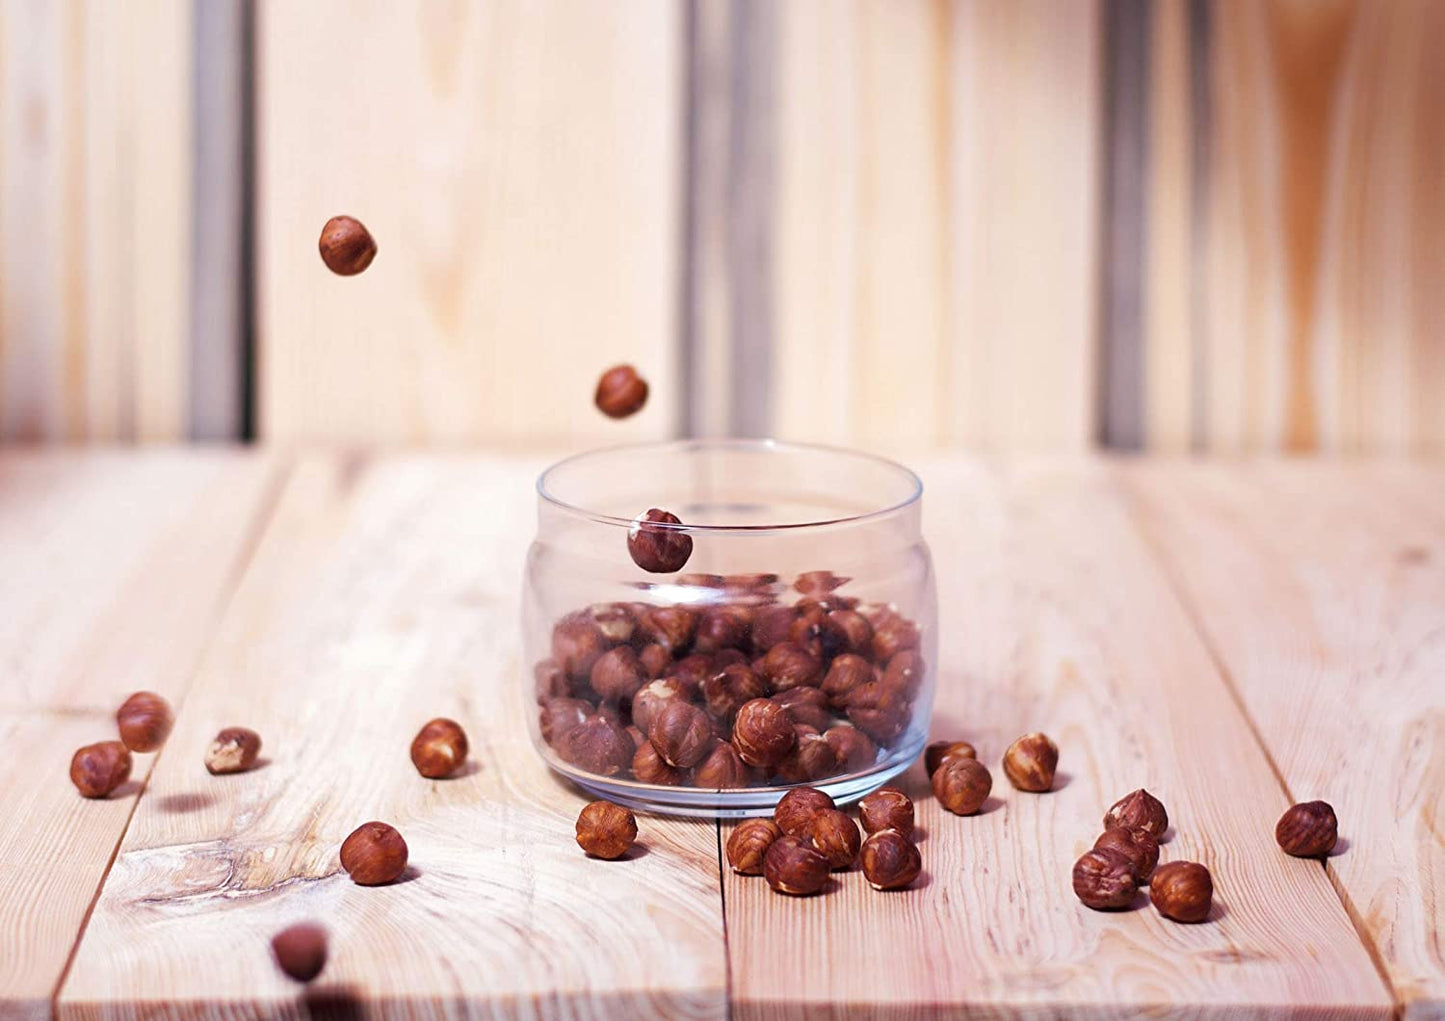 Organic Hazelnuts / Filberts - Non-GMO, Kosher, Raw, No Shell, Bulk - by Food to Live